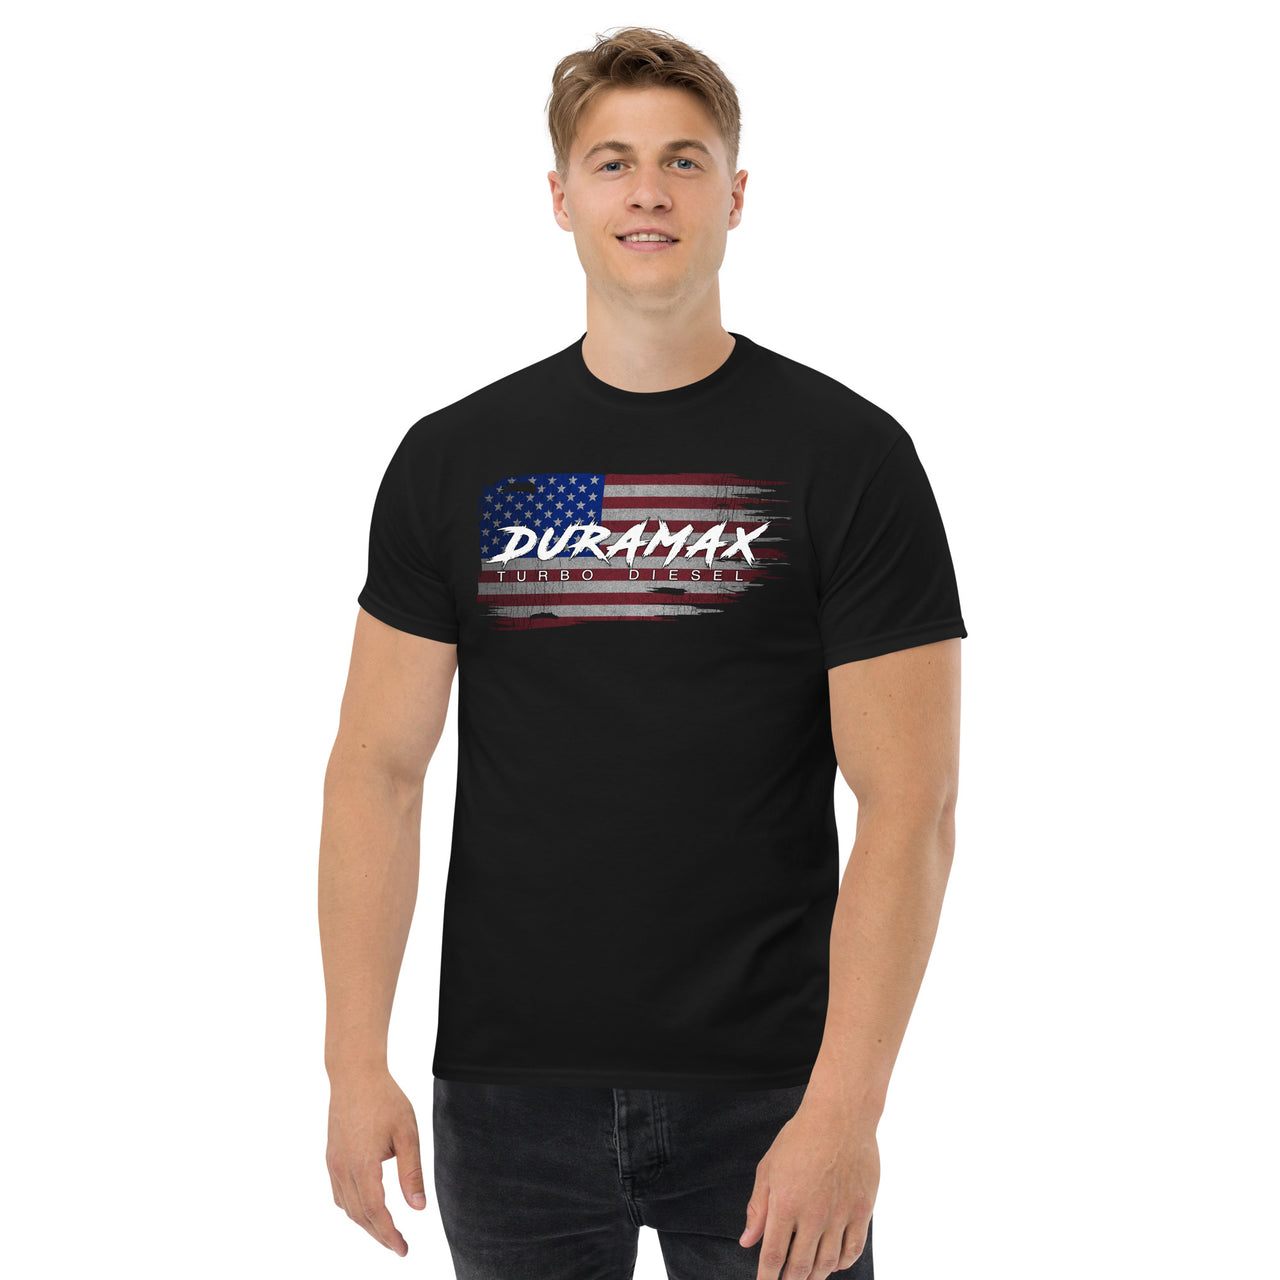 Duramax Diesel T-Shirt American Flag Shirt modeled in black